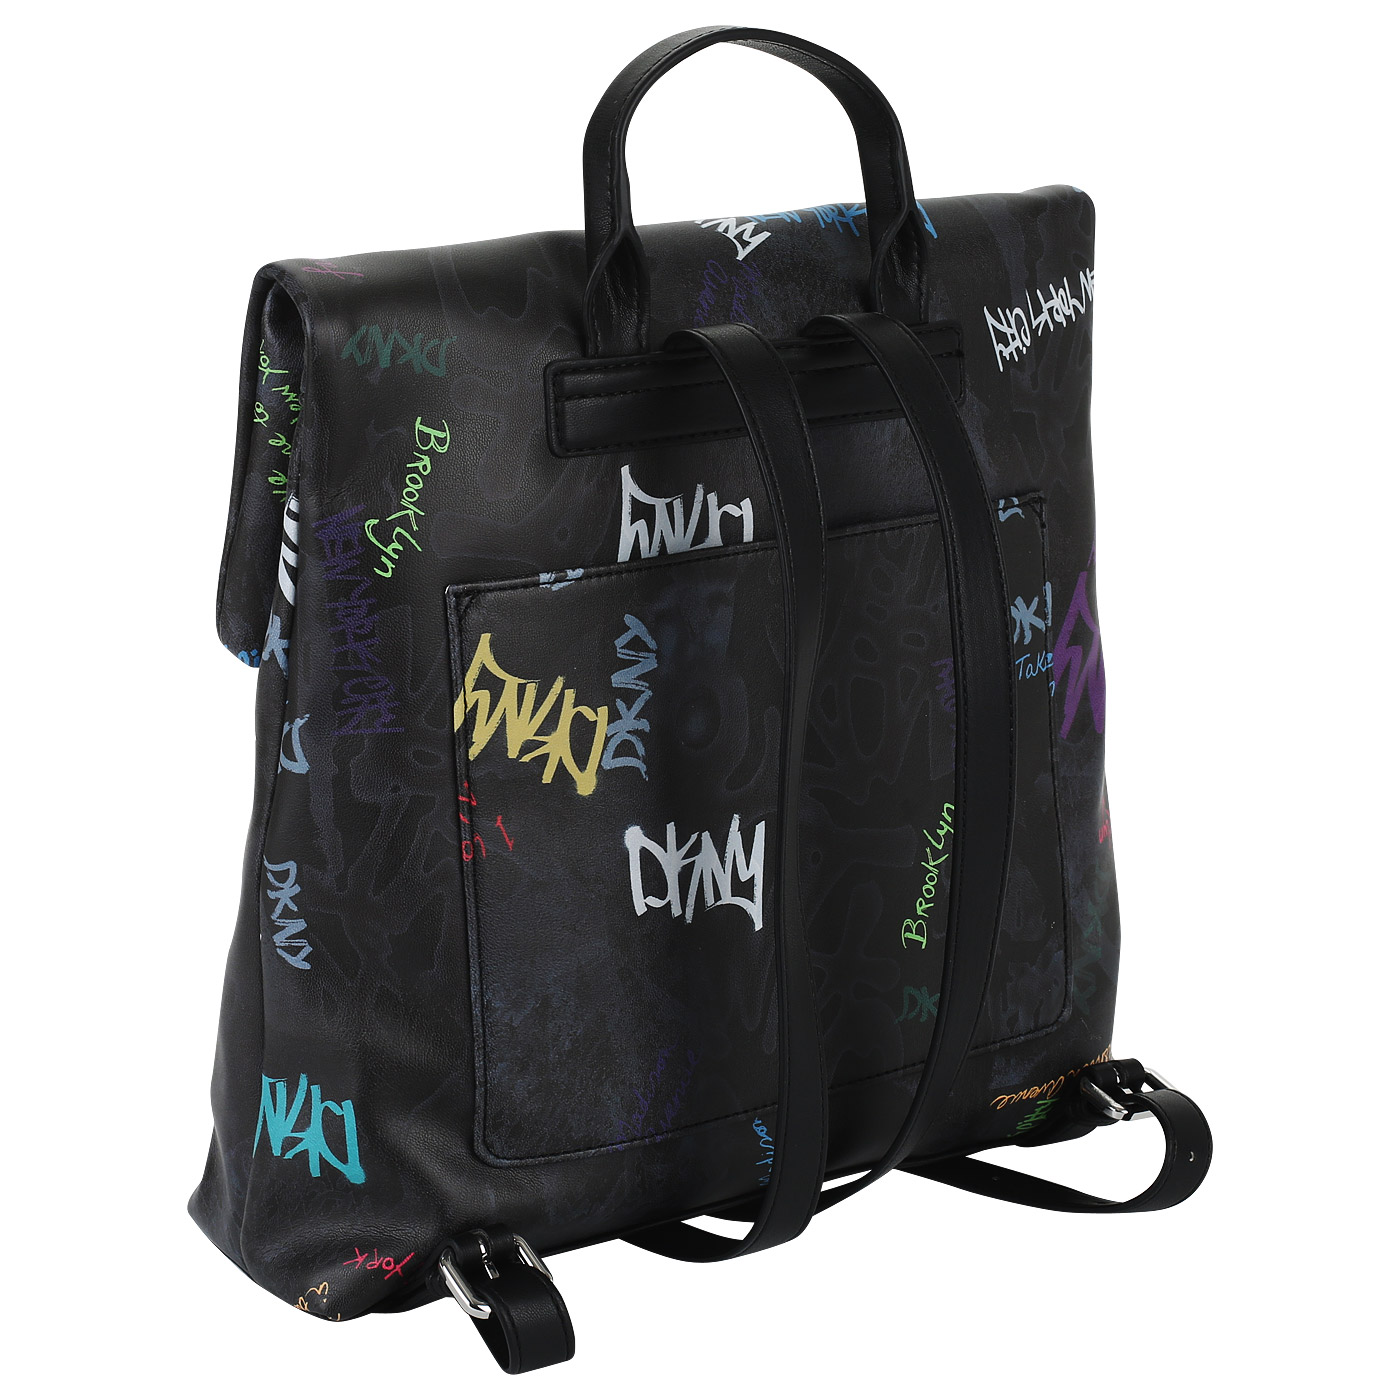 Рюкзак с логотипом бренда DKNY Tilly